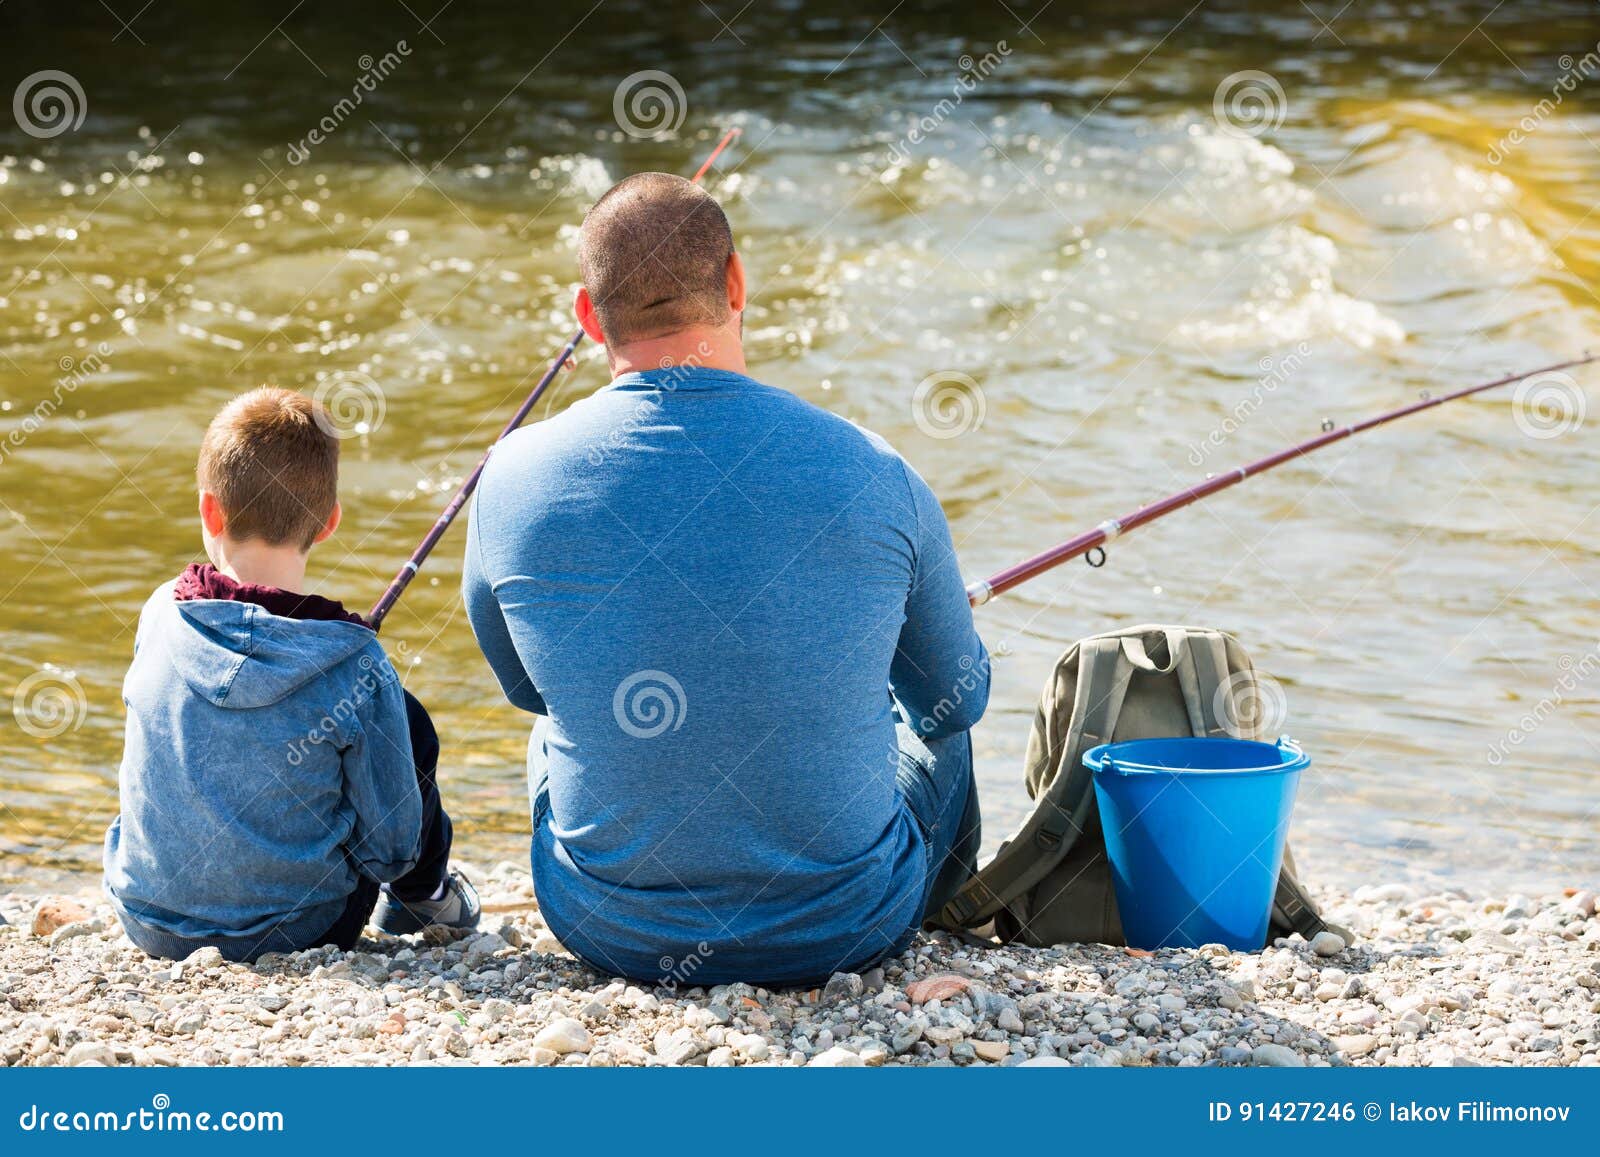 251 Father Fishing Teen Stock Photos - Free & Royalty-Free Stock